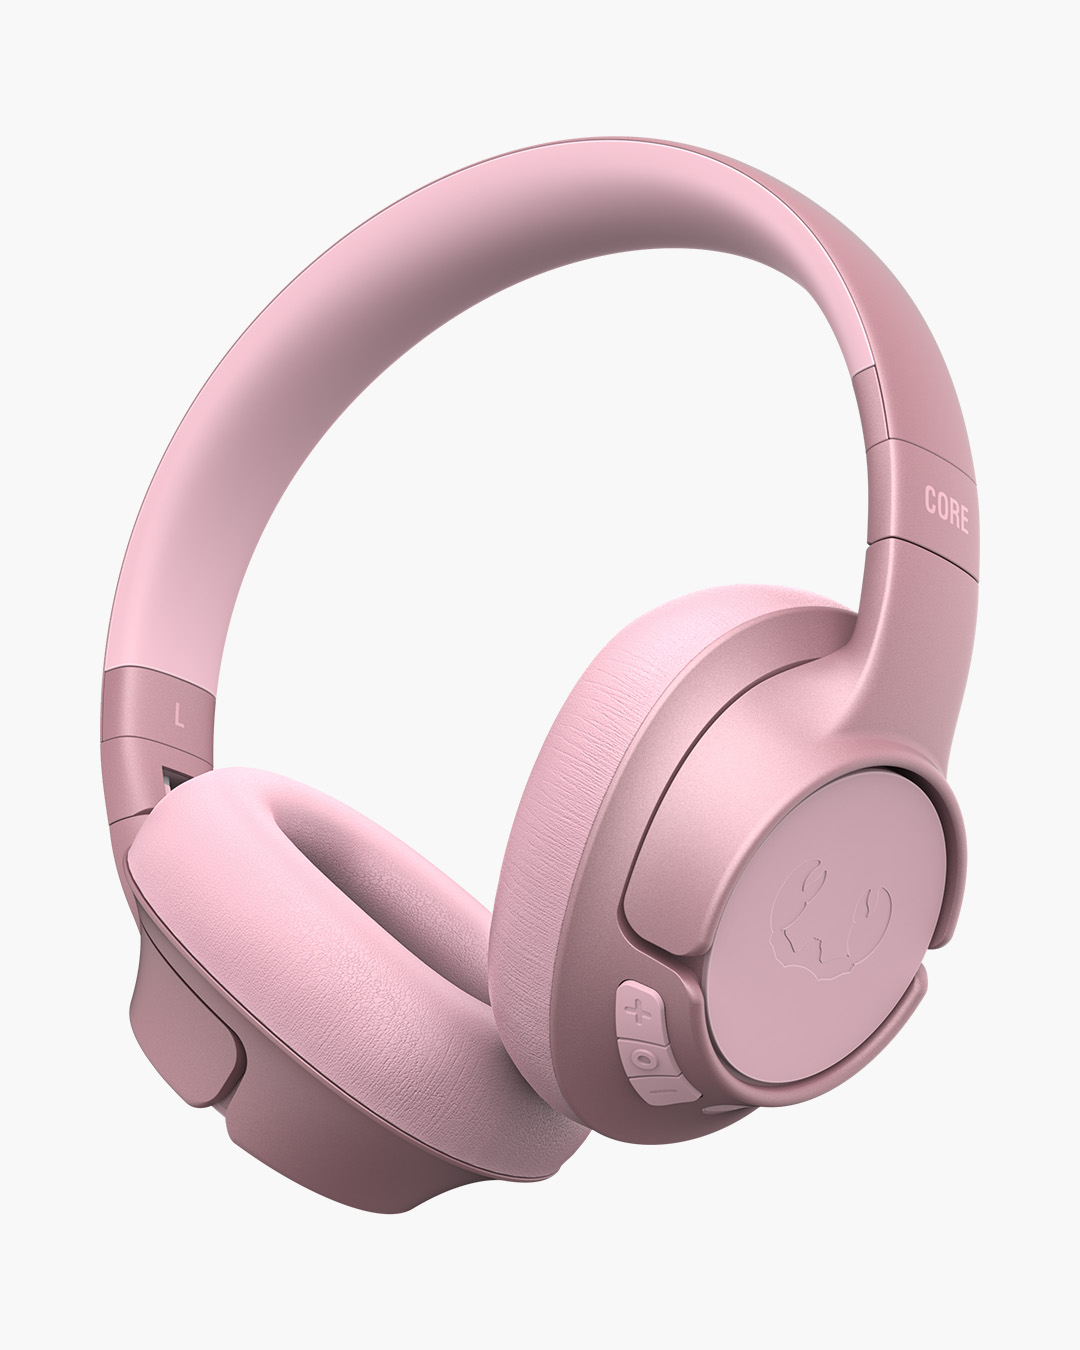 Fresh 'n Rebel Headphones | On-ear and Over-ear | Now online!